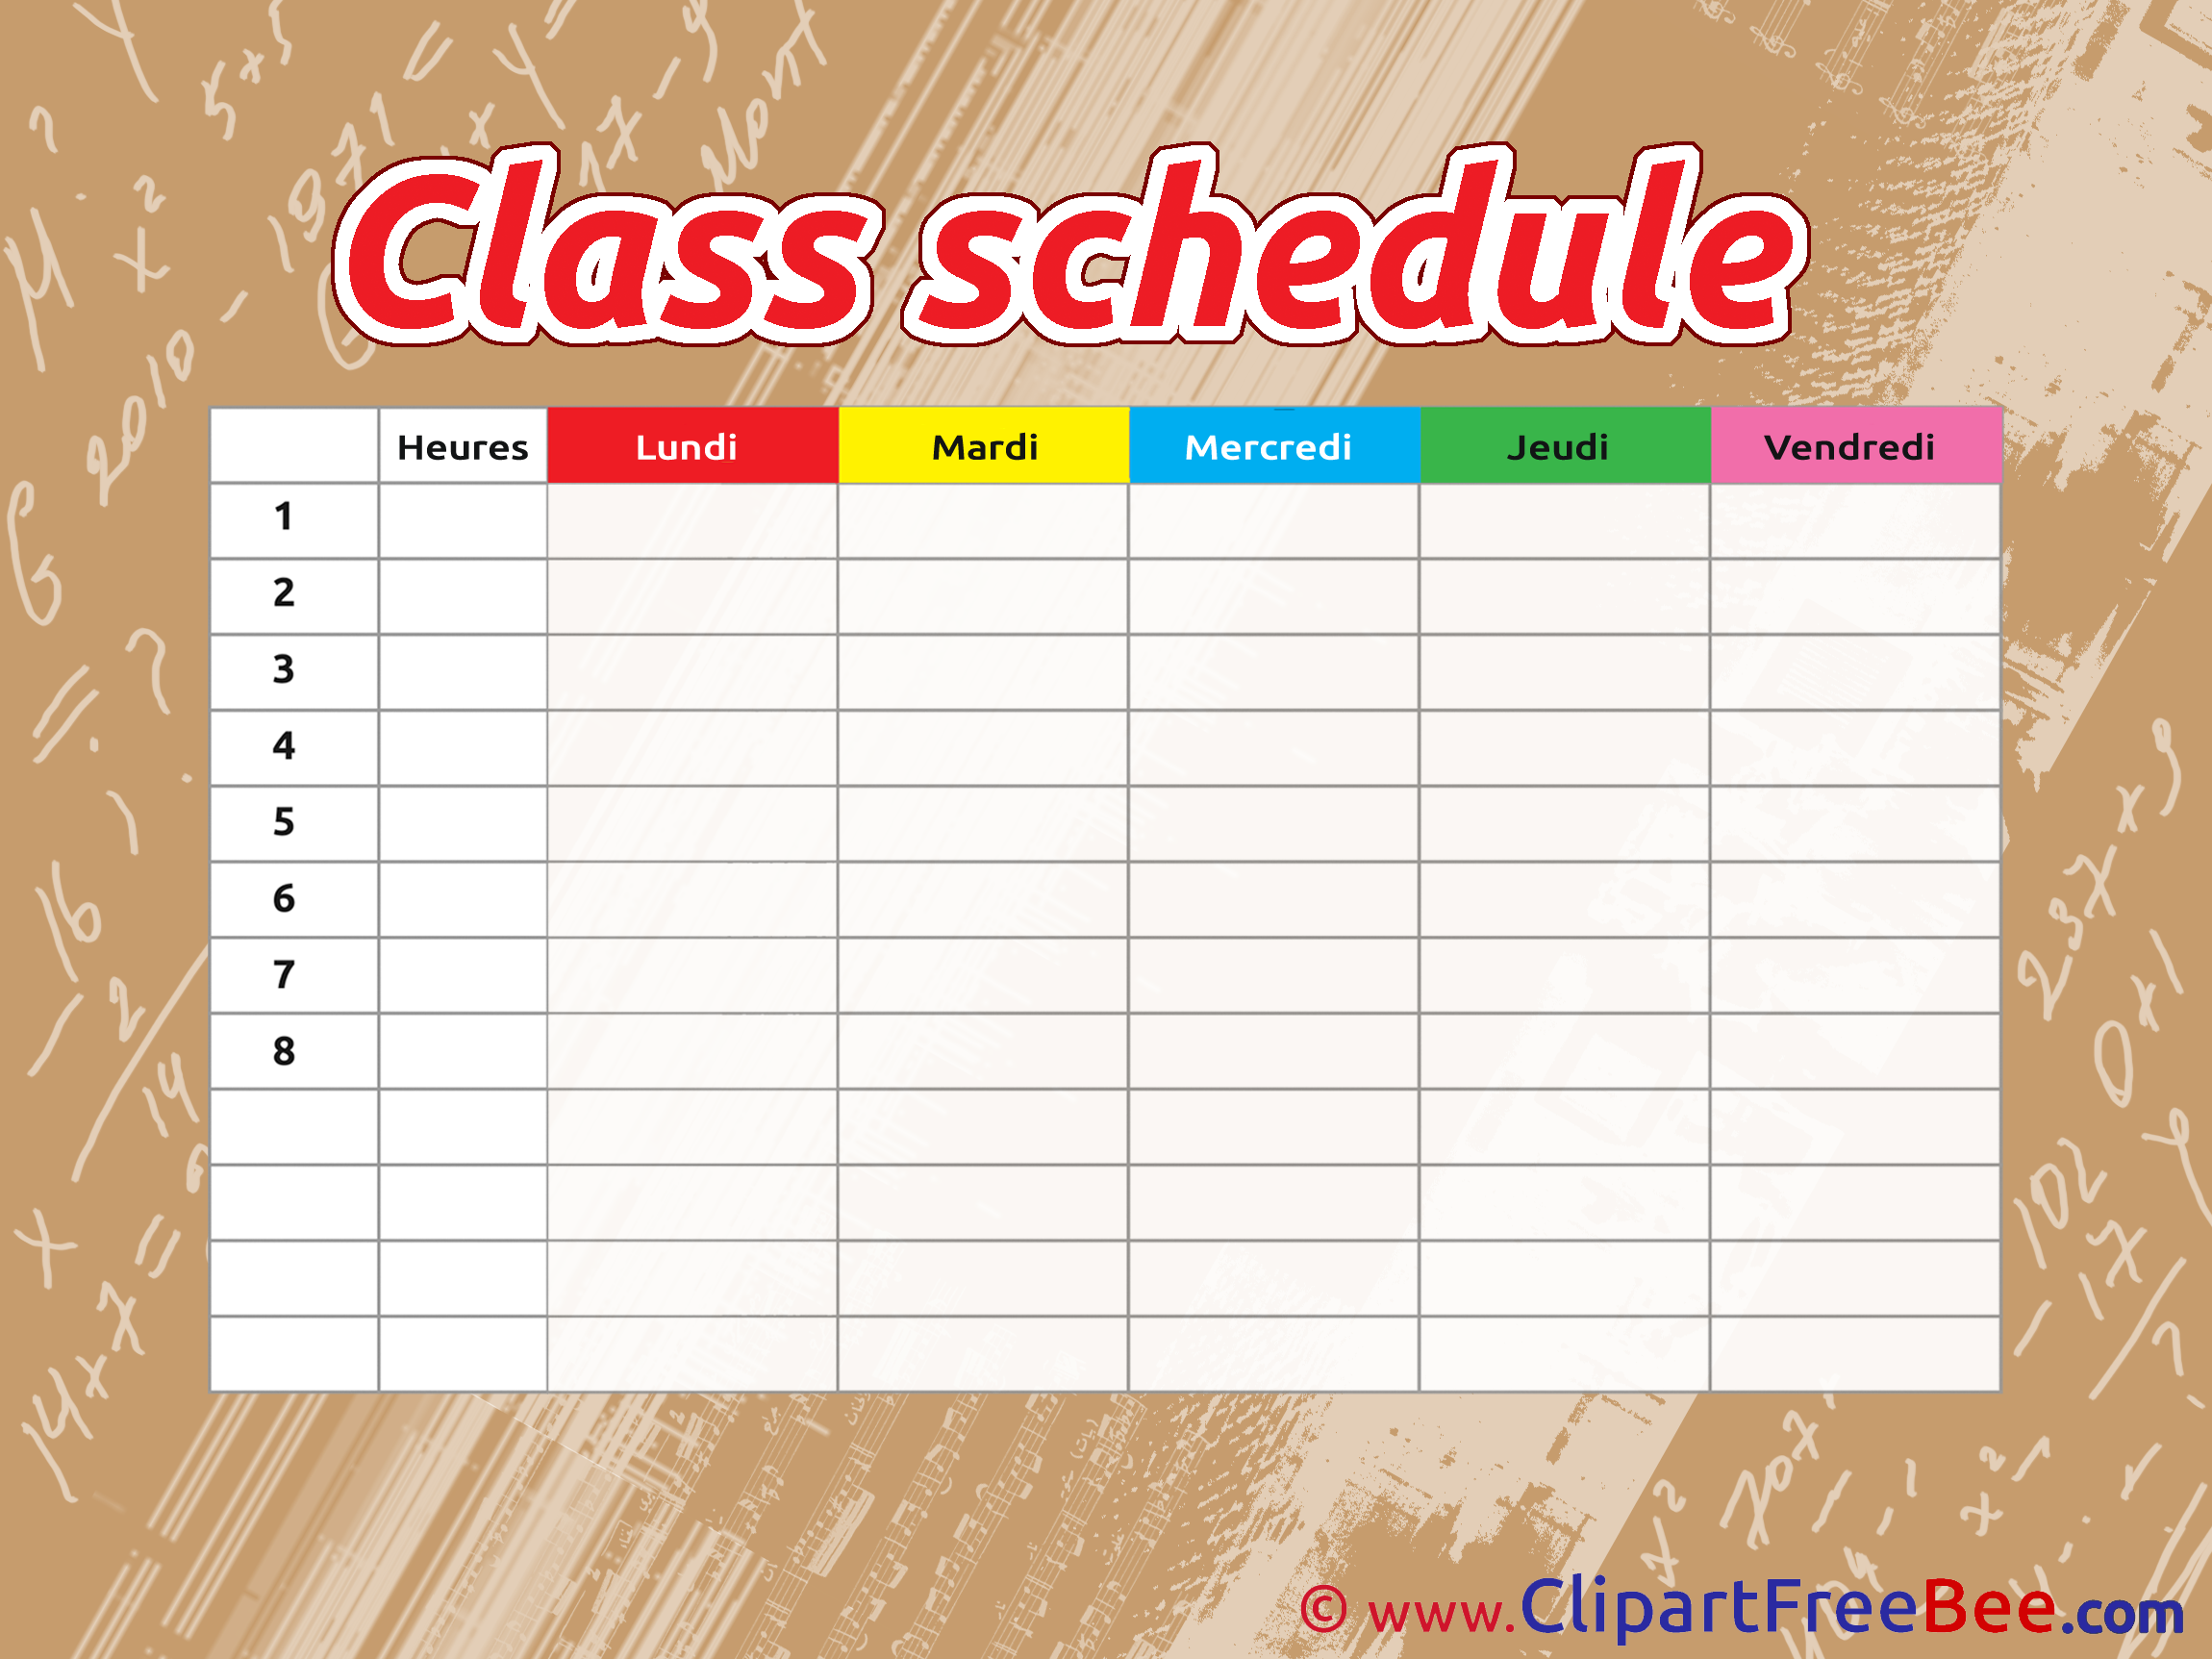 School Class Schedule Clip Art download for free.